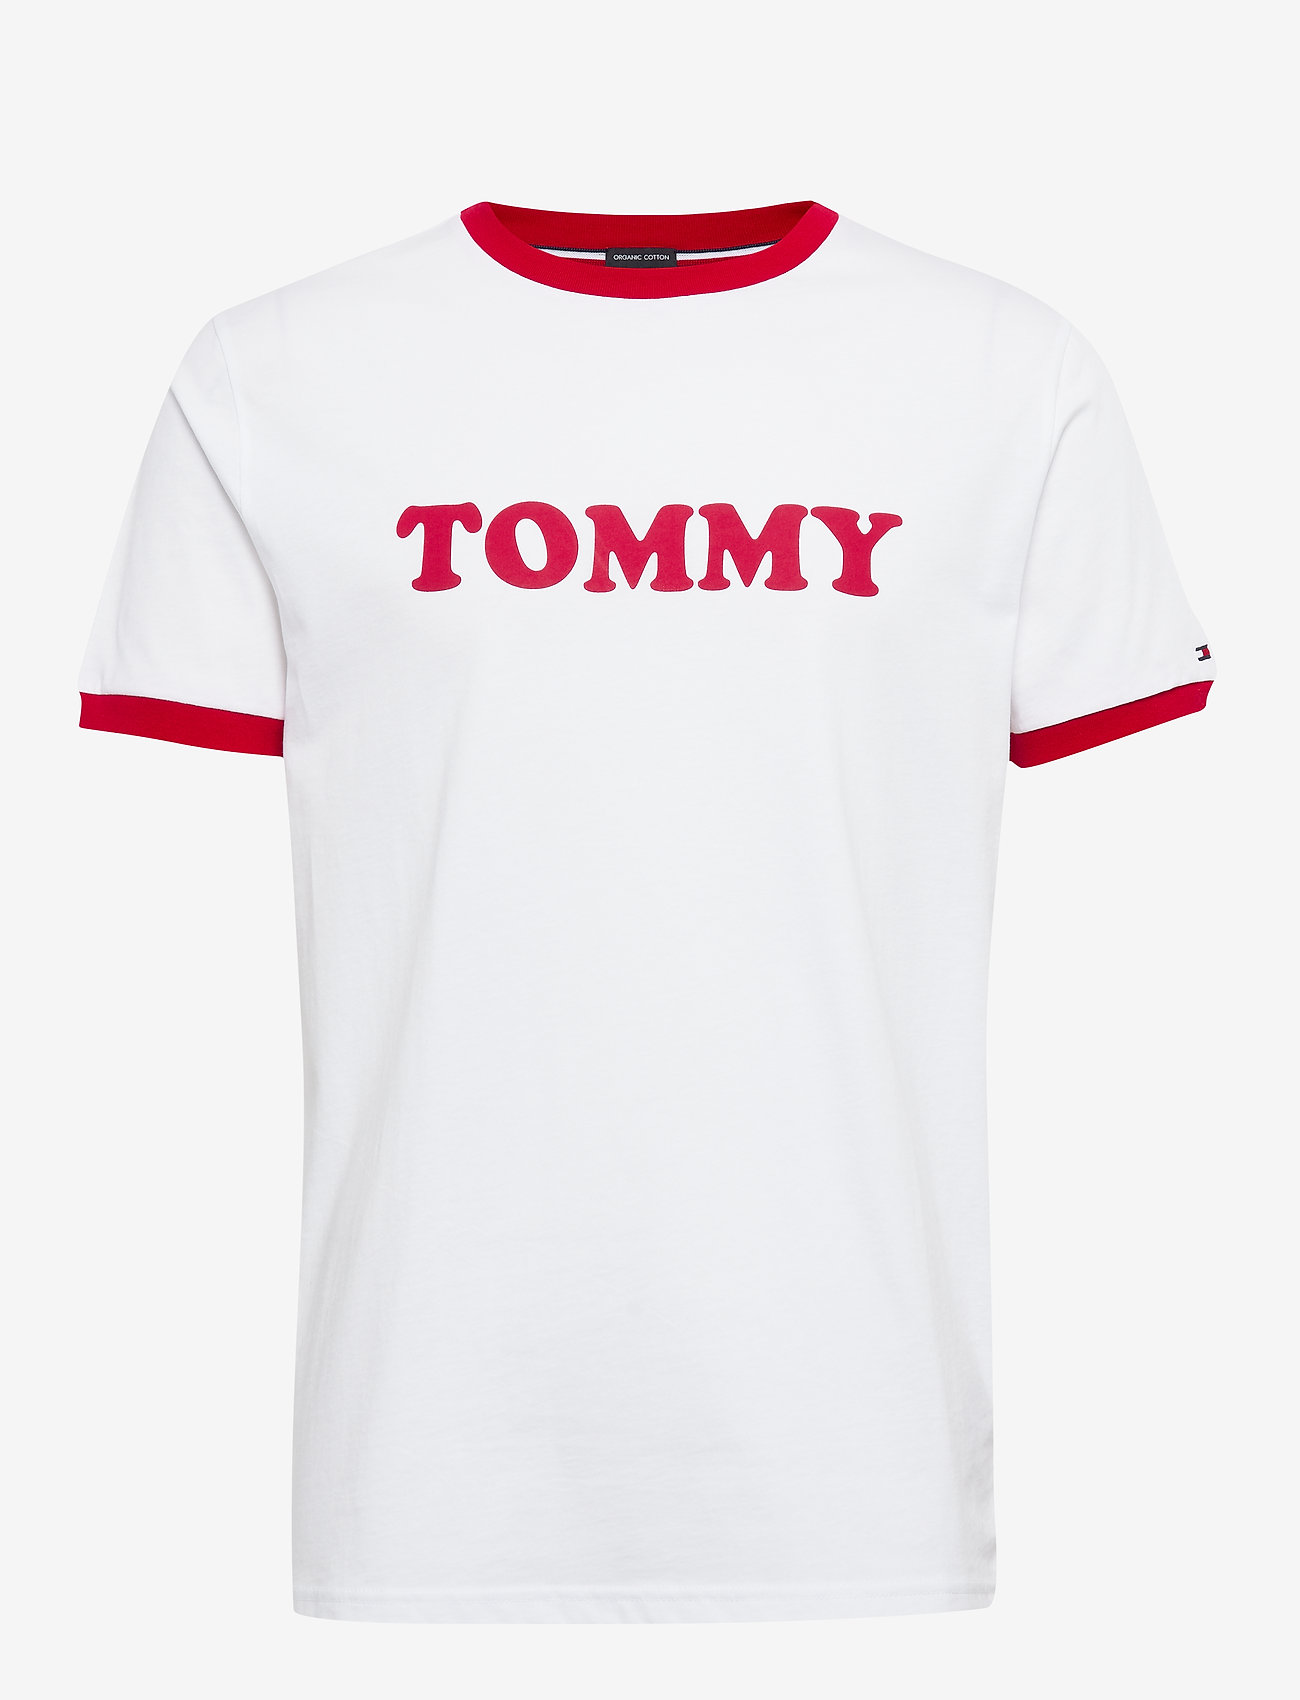 Tommy Hilfiger Mens Cn Ss Tee T-Shirt